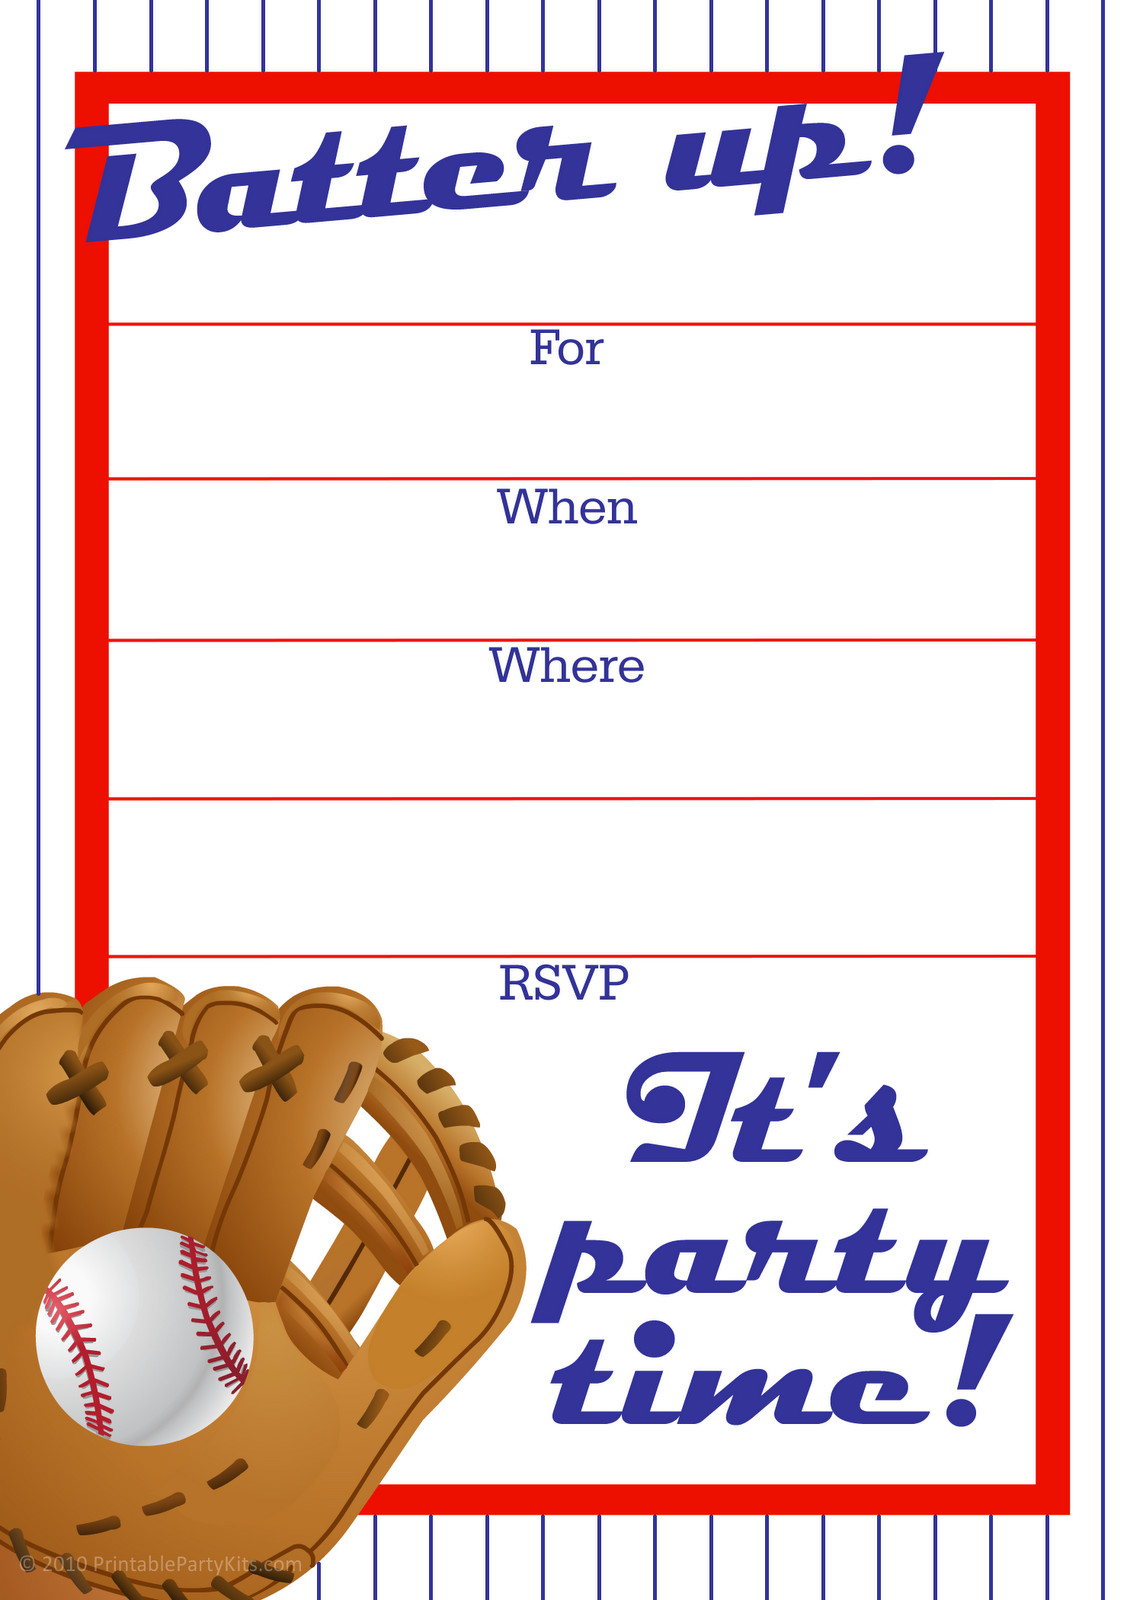 Best ideas about Free Printable Birthday Invitations
. Save or Pin Free Printable Party Invitations Free Baseball Birthday Now.